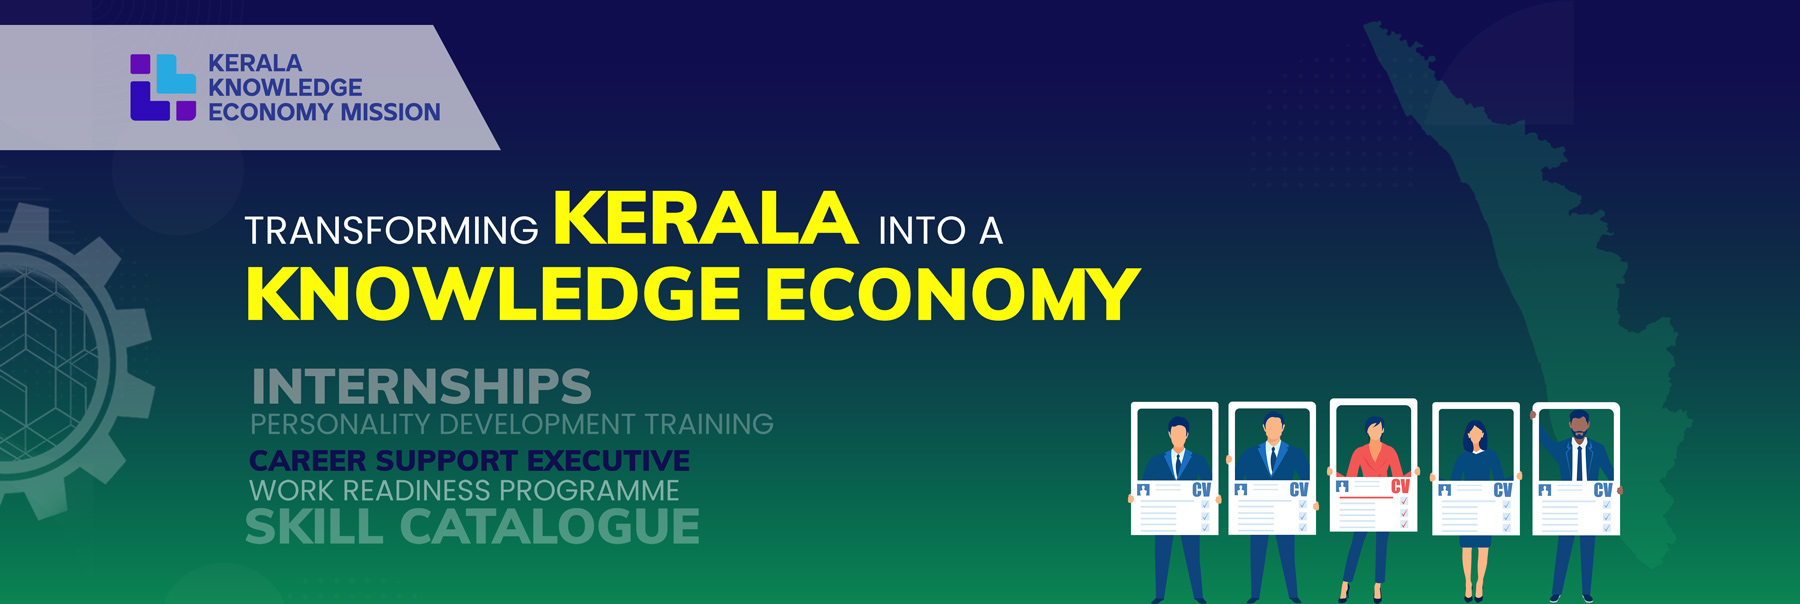 Transforming Kerala into a knowledge economy